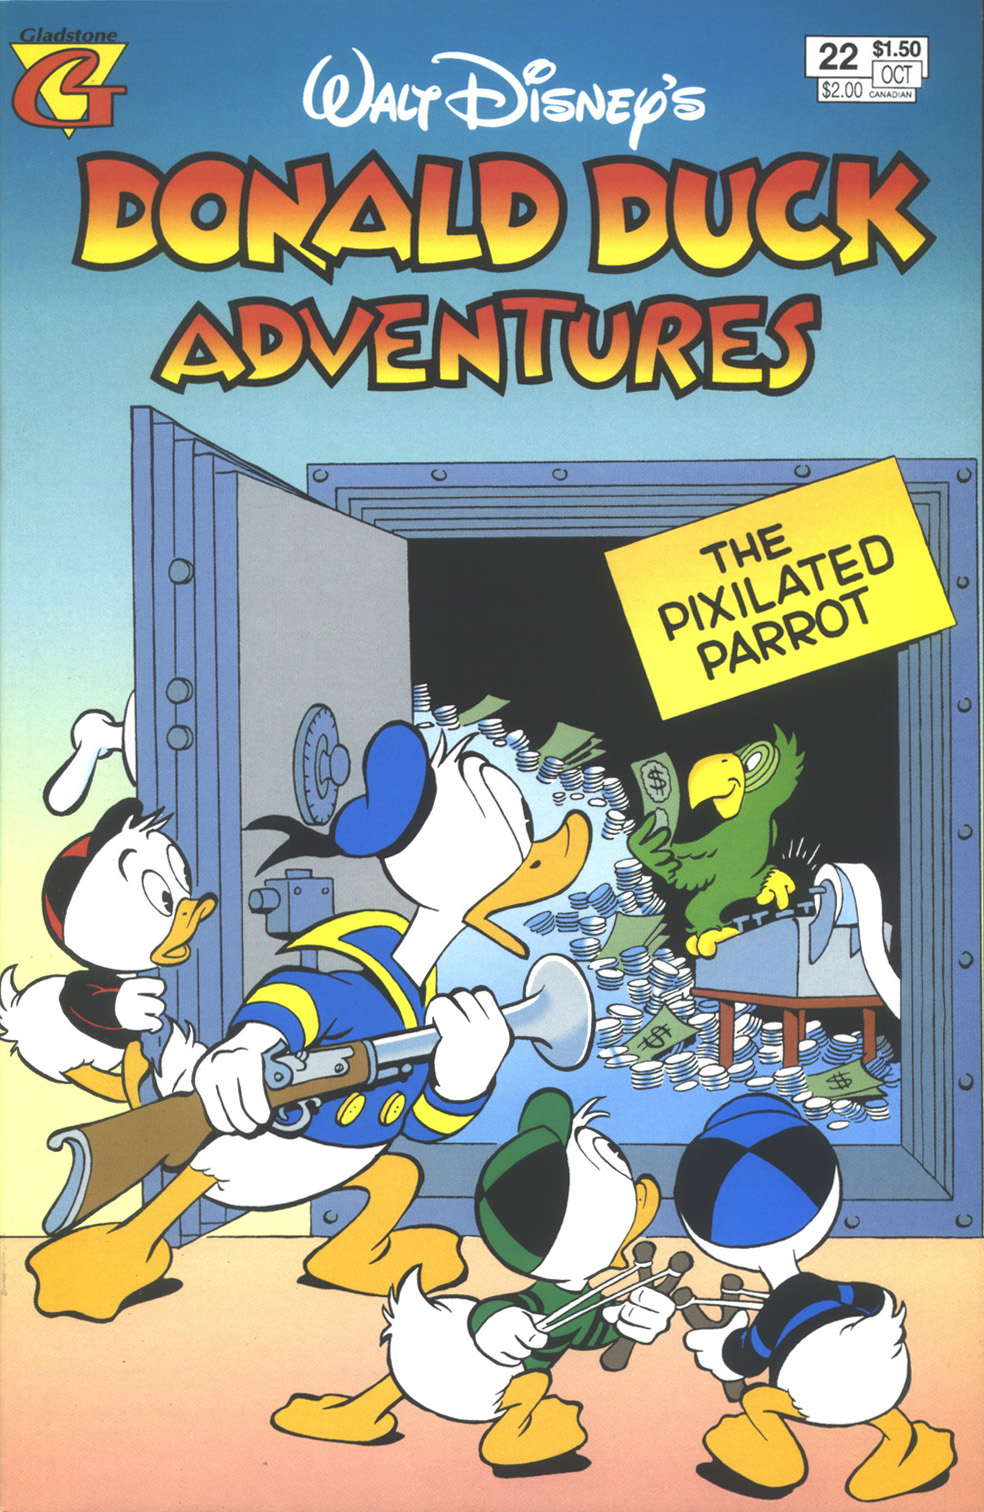 Walt Disney's Donald Duck Adventures (1987) issue 22 - Page 1